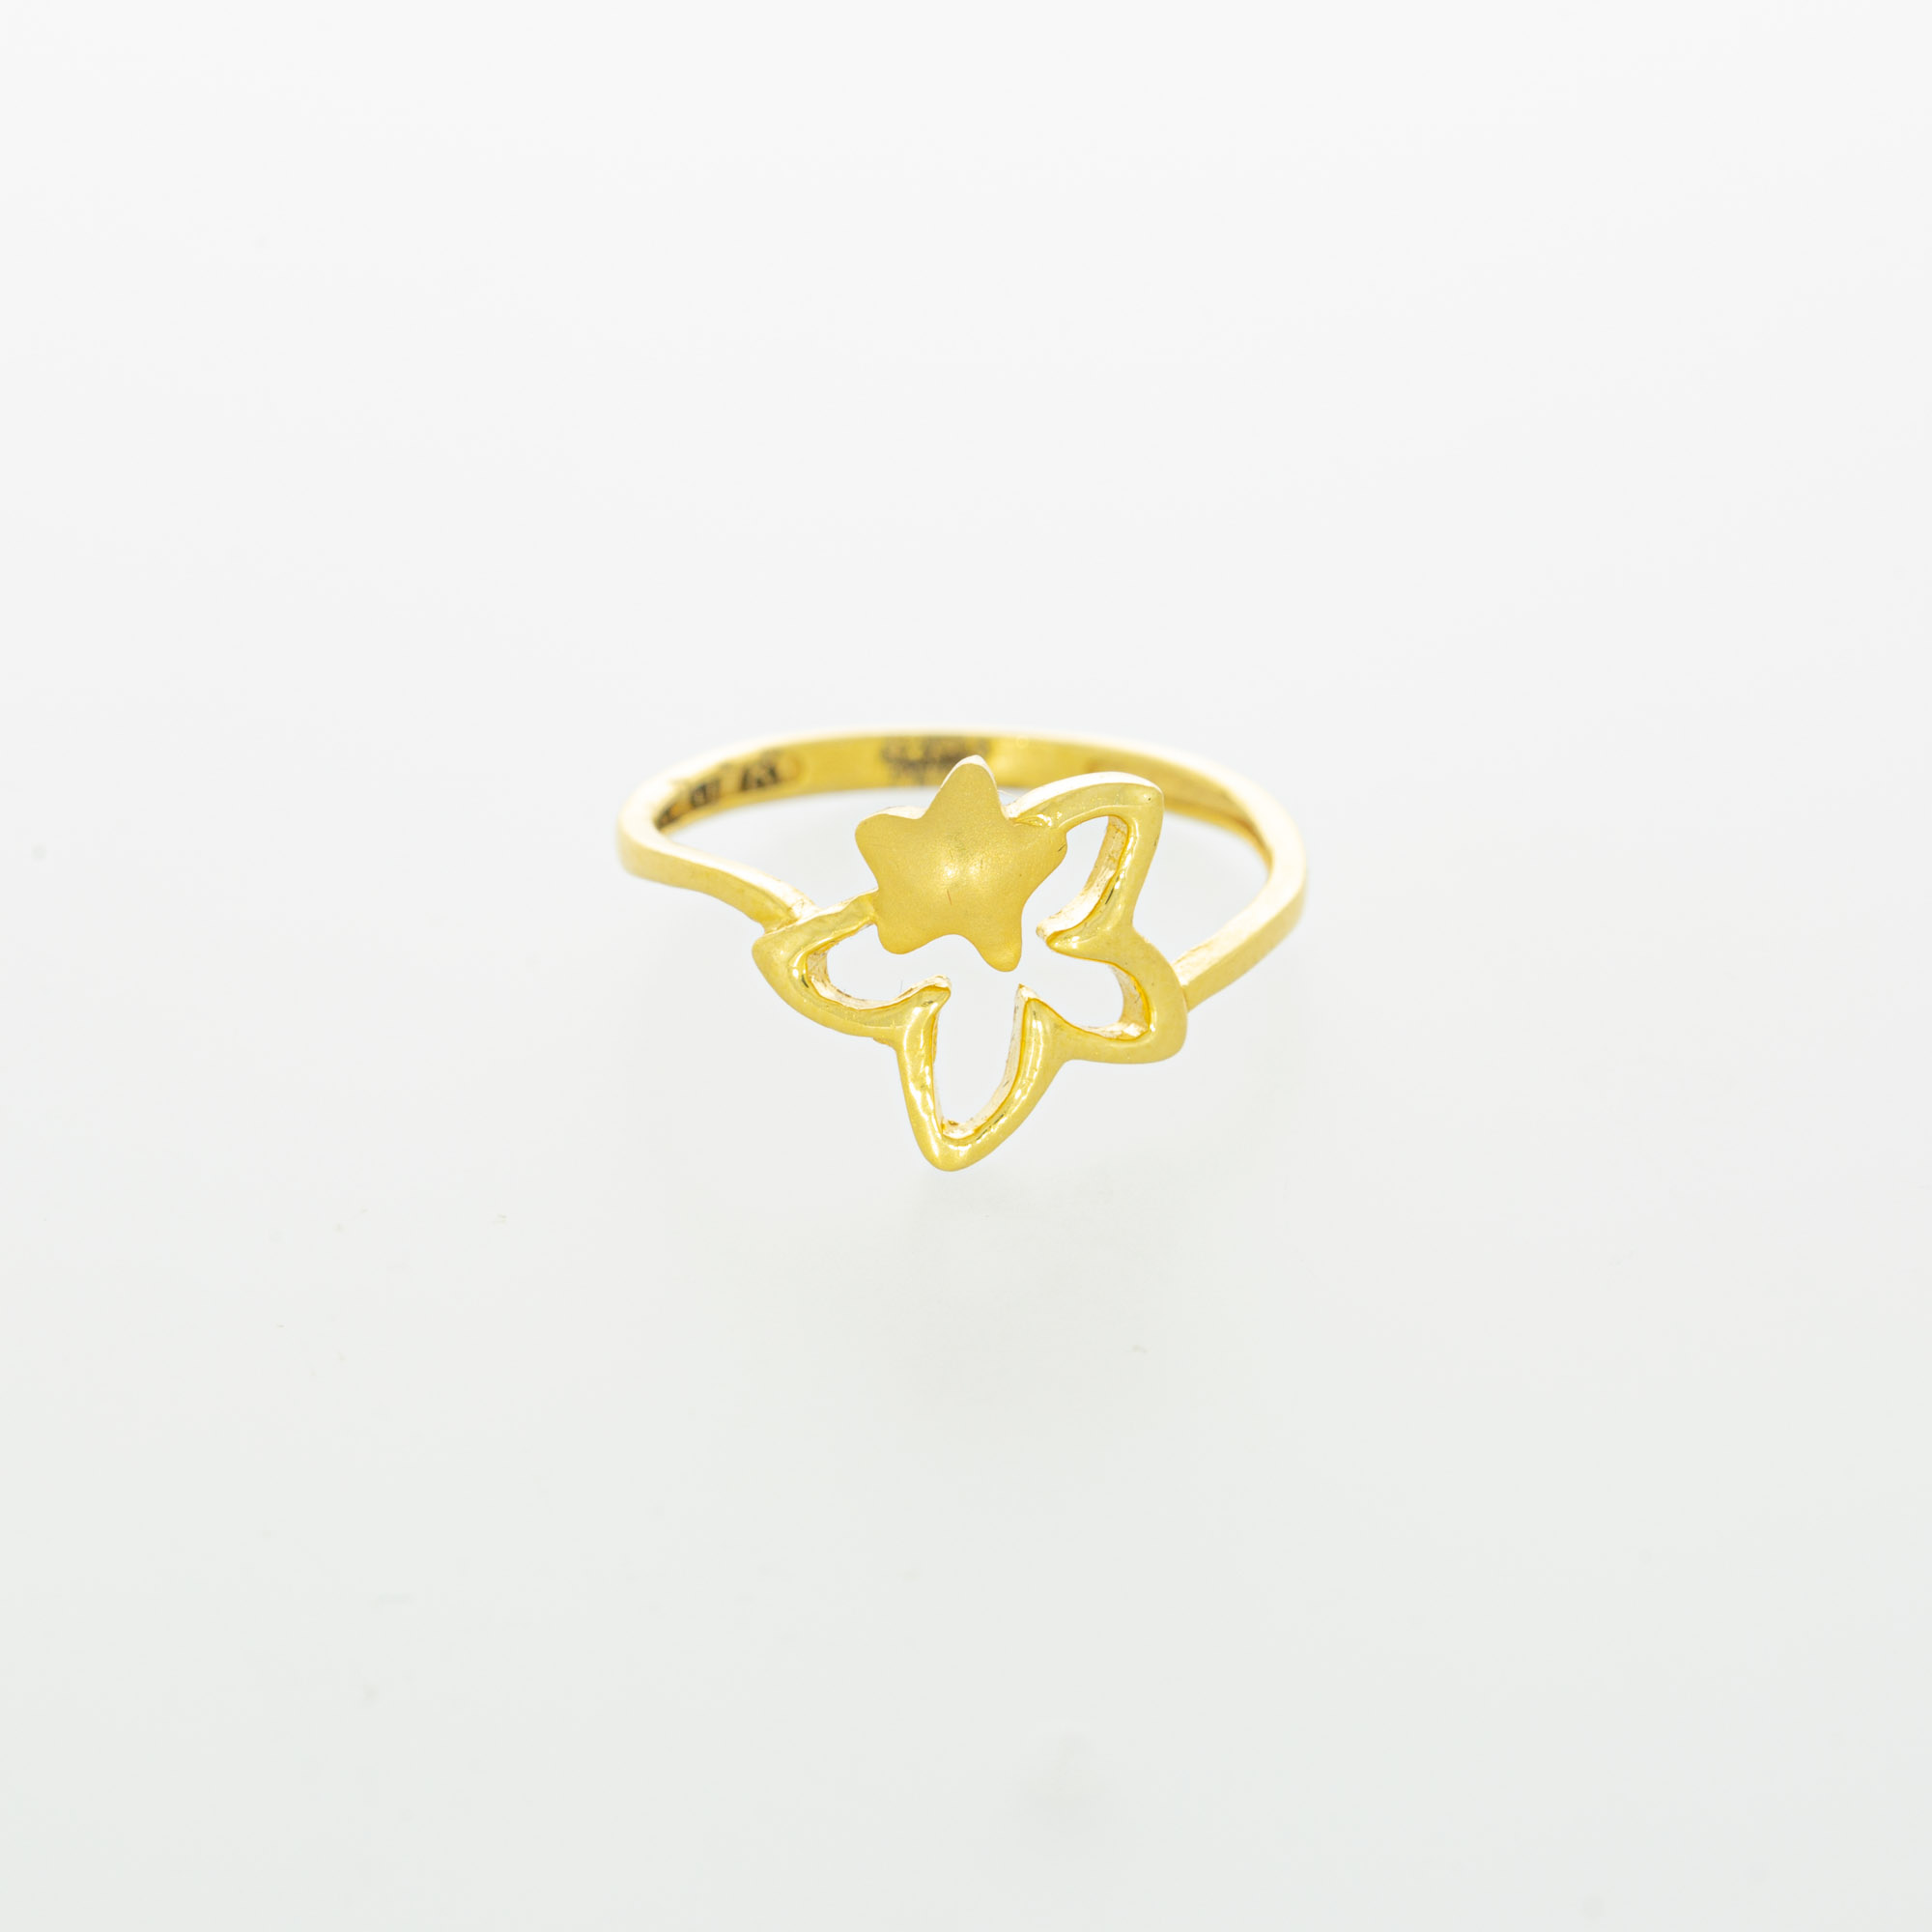 Star Design 22kt Gold Finger Ring